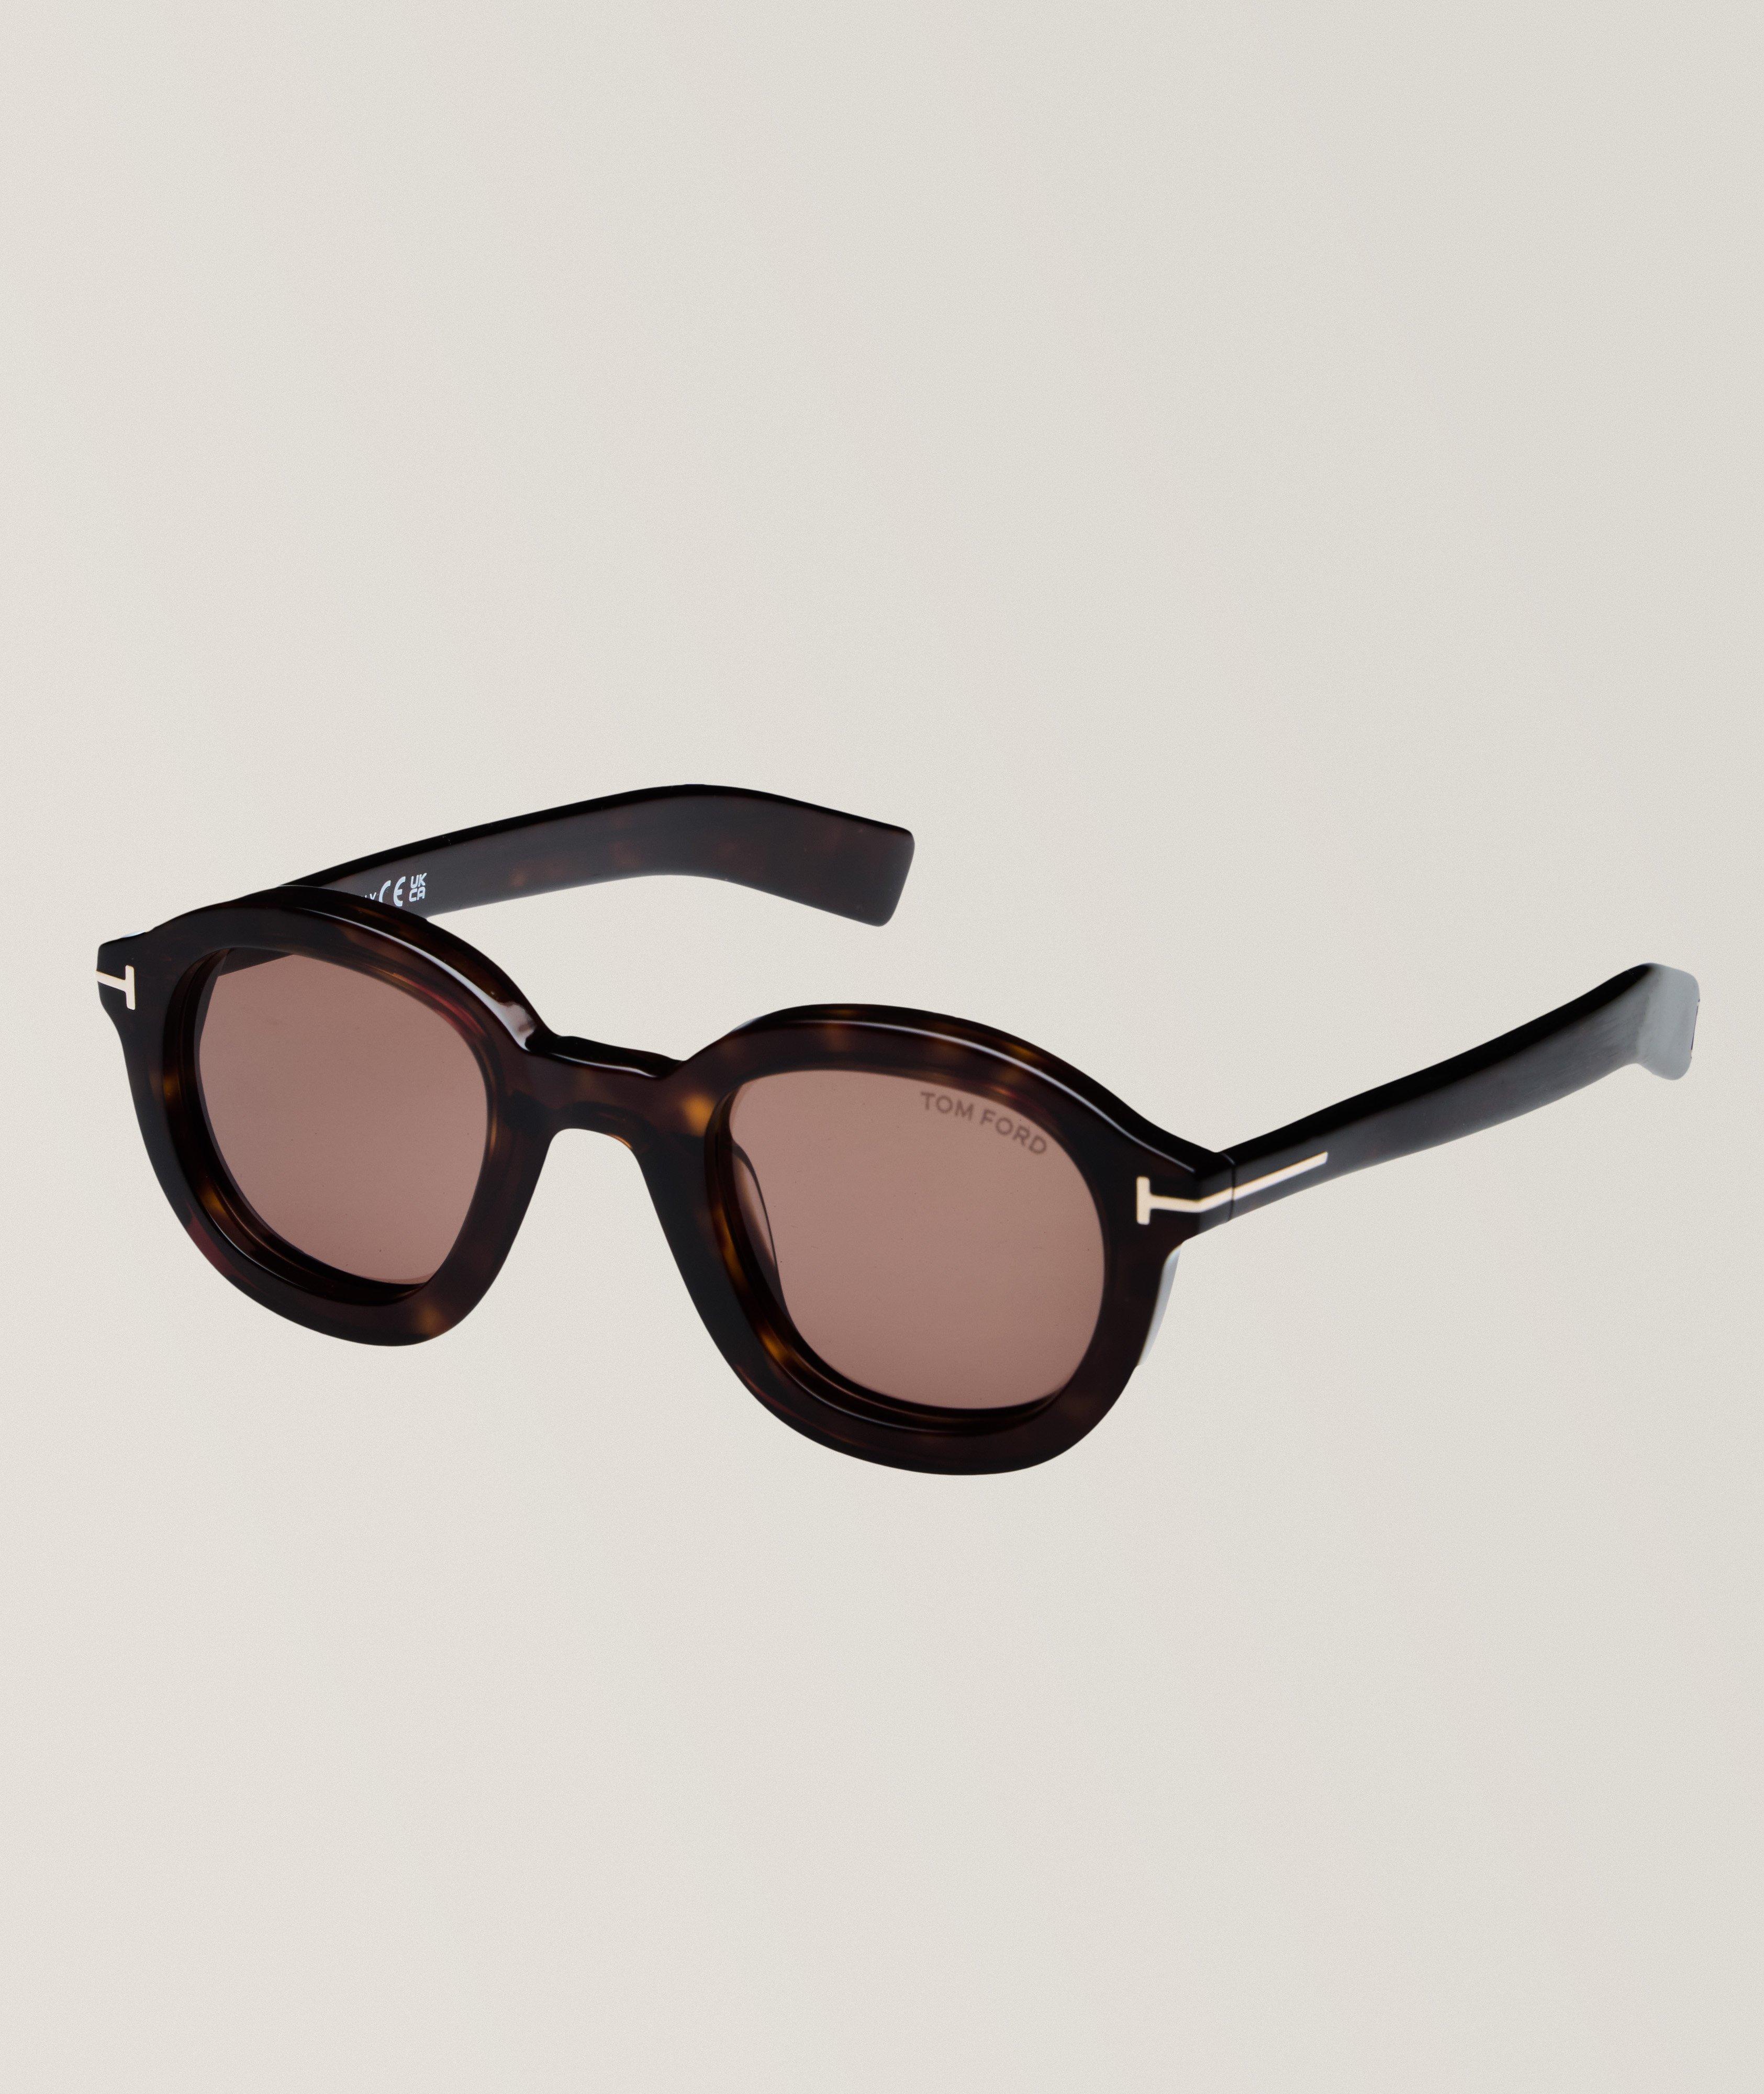 Raffa Round Frame Sunglasses image 0